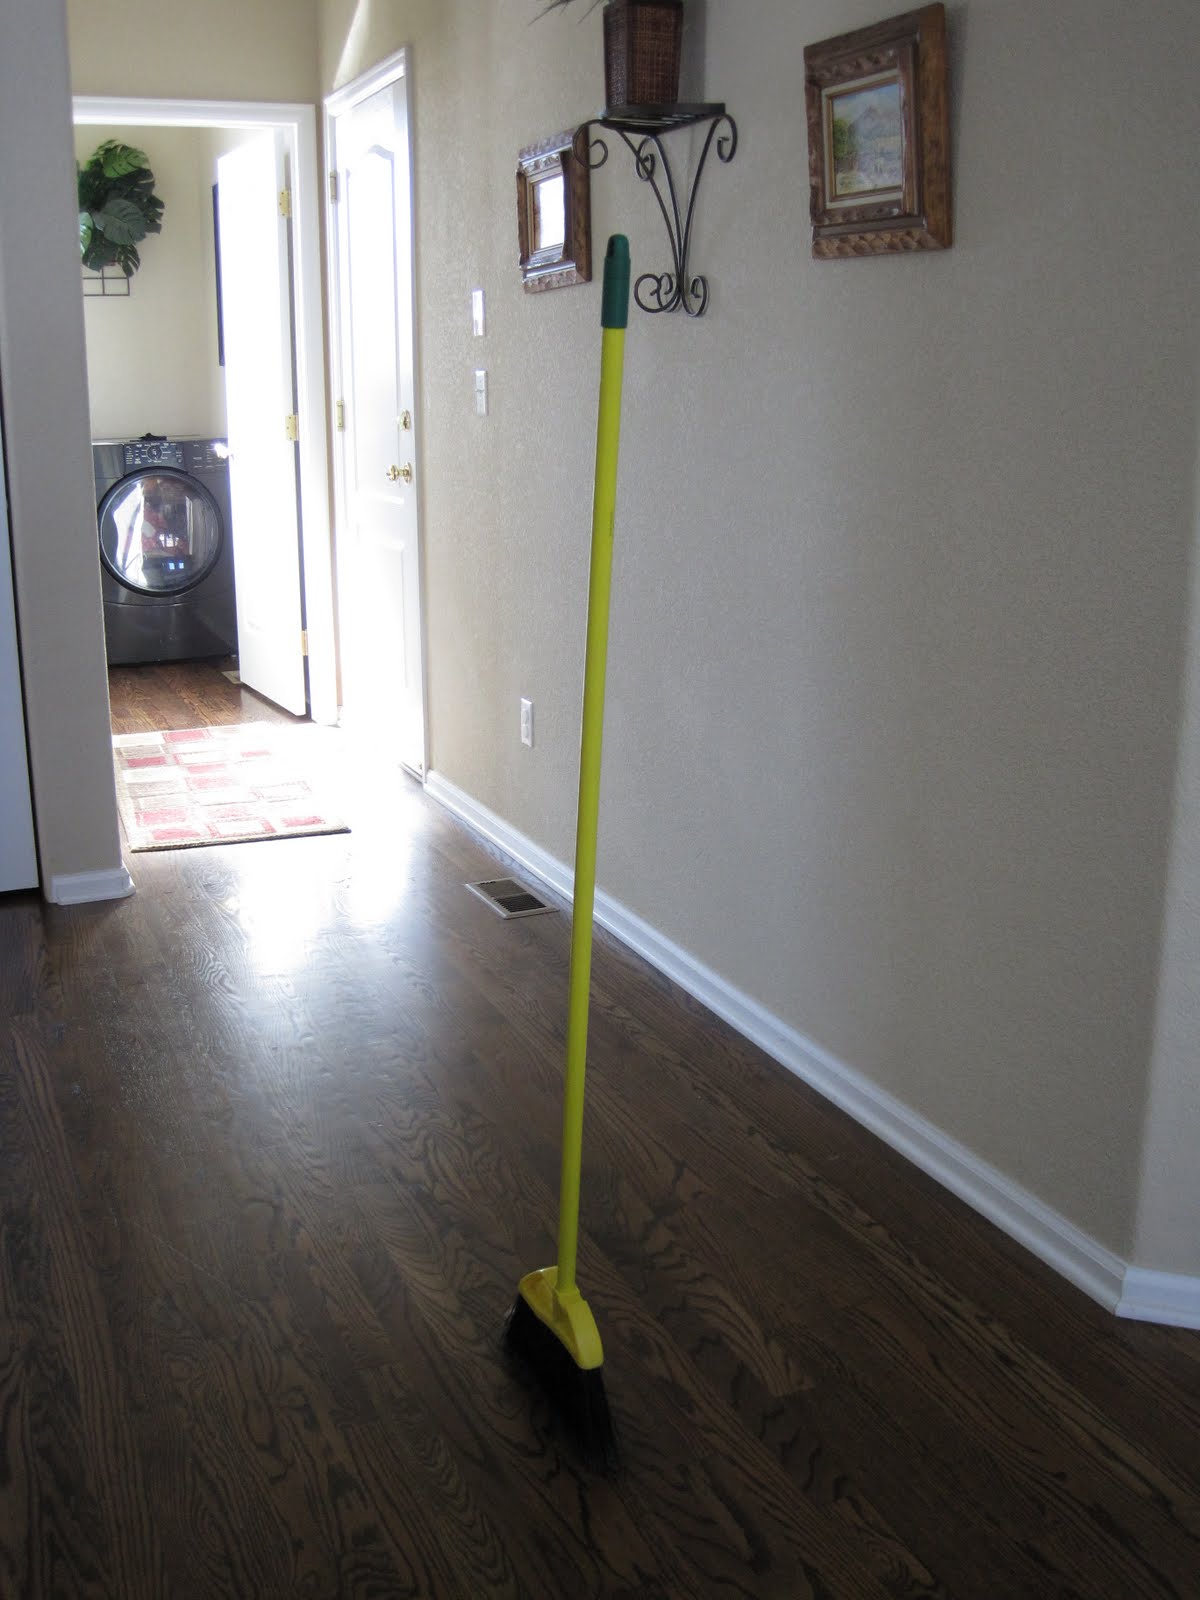 Magical Anti-Gravity Broom! - Confessions of a Homeschooler